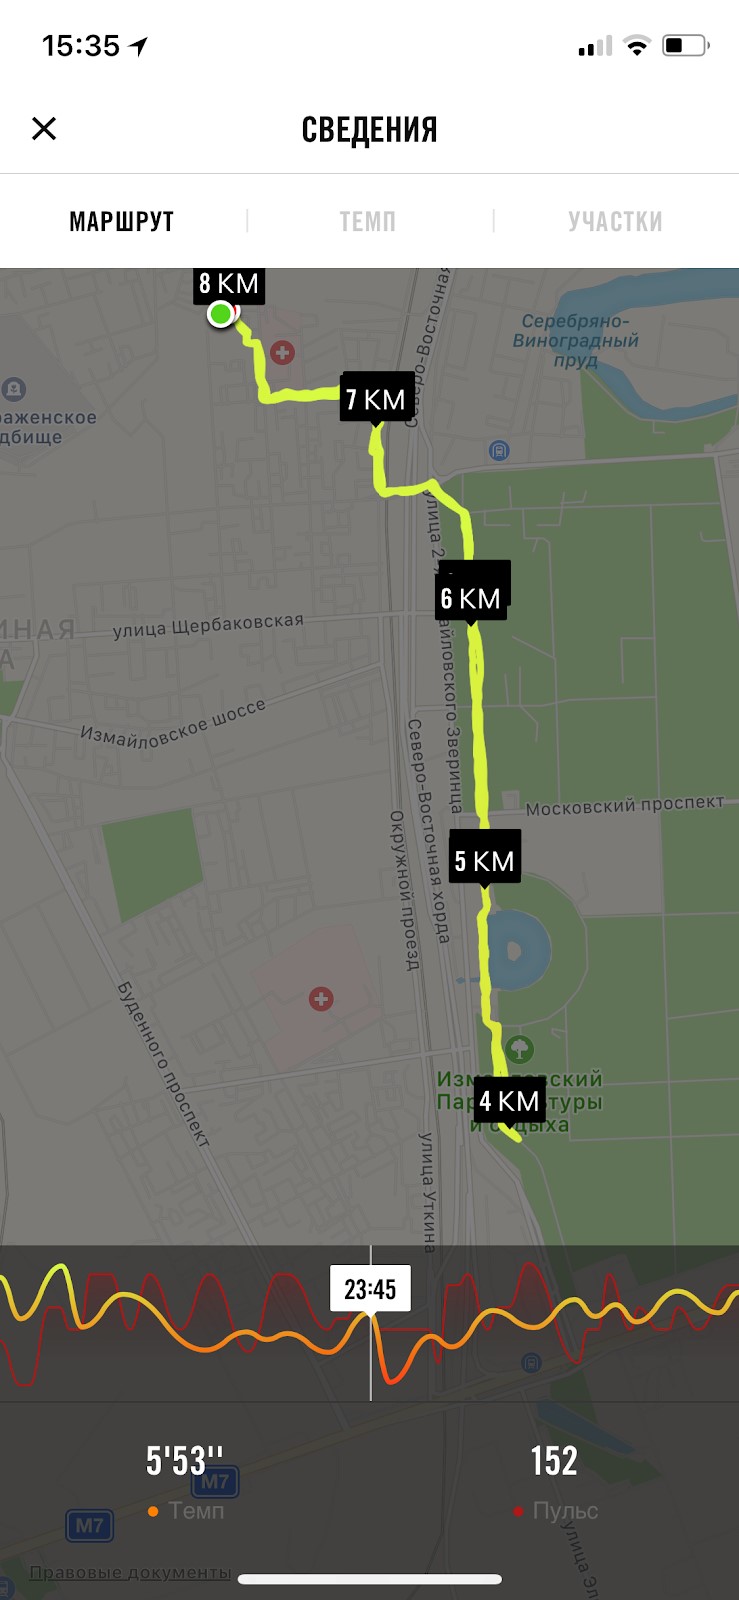 [Хабра-оффтоп] Maratona di Roma, или первый марафон для ИТ-шника - 10